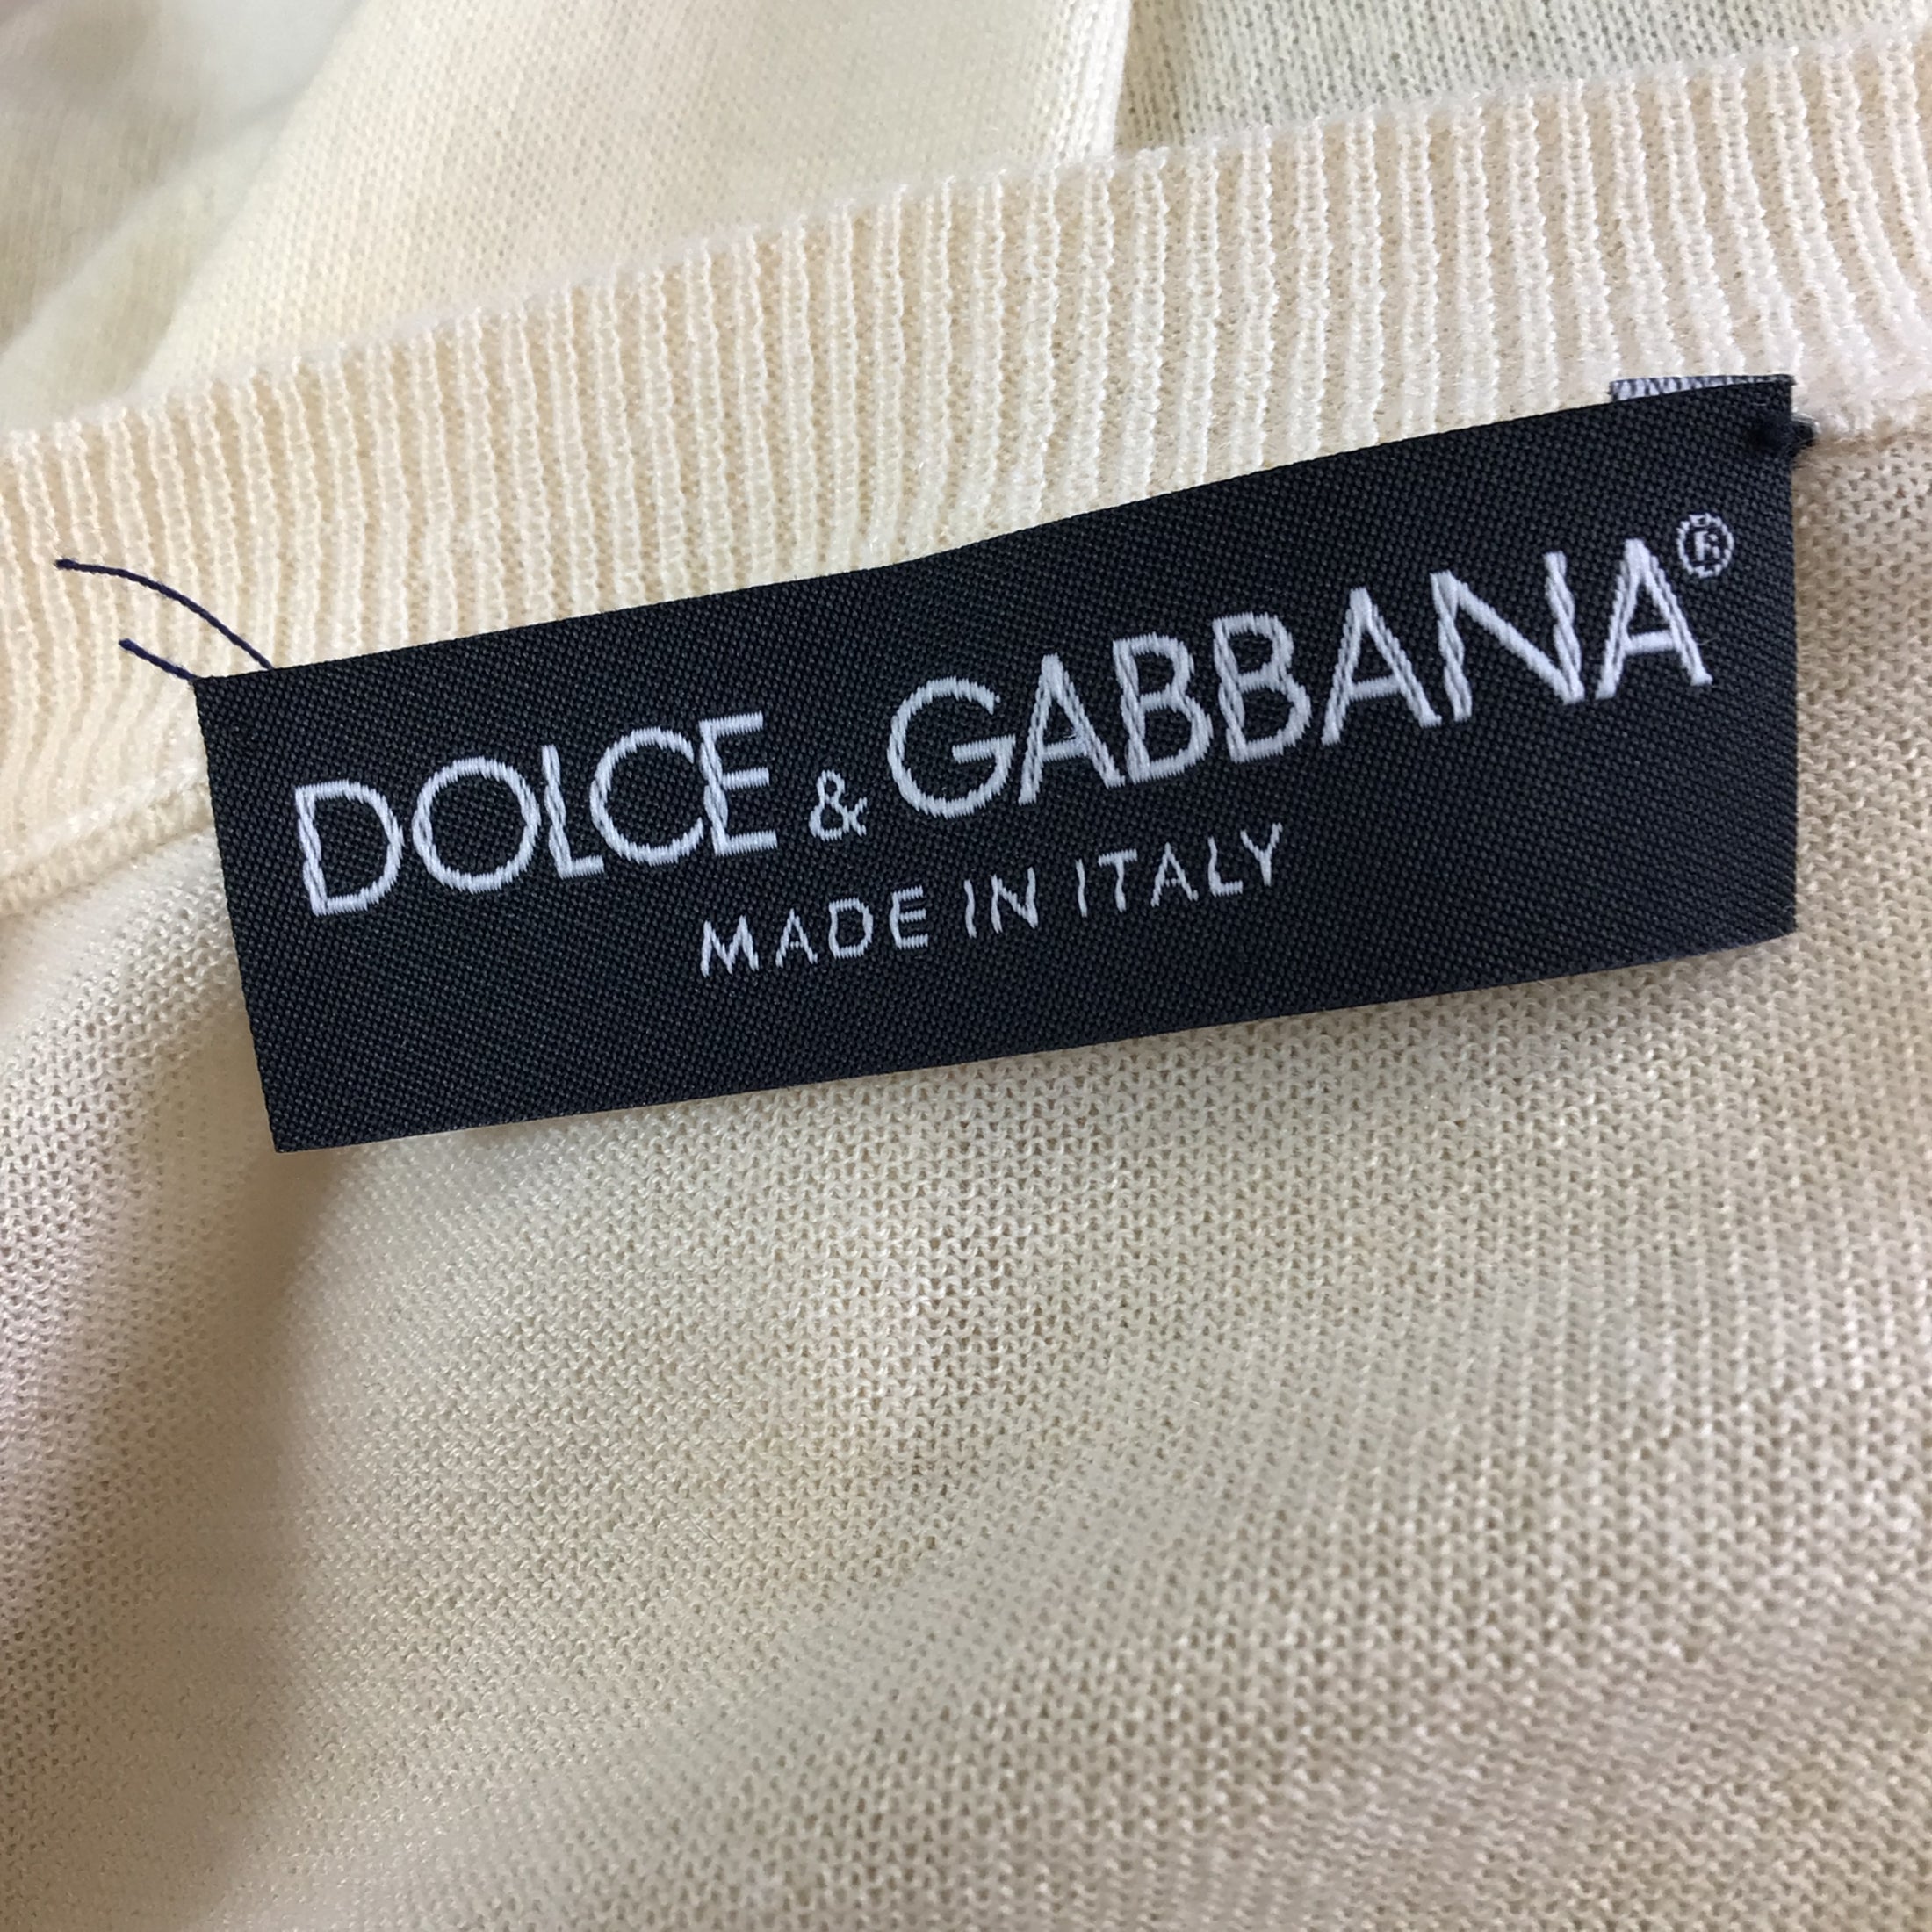 Dolce & Gabbana Ivory Cashmere Knit Cardigan Sweater